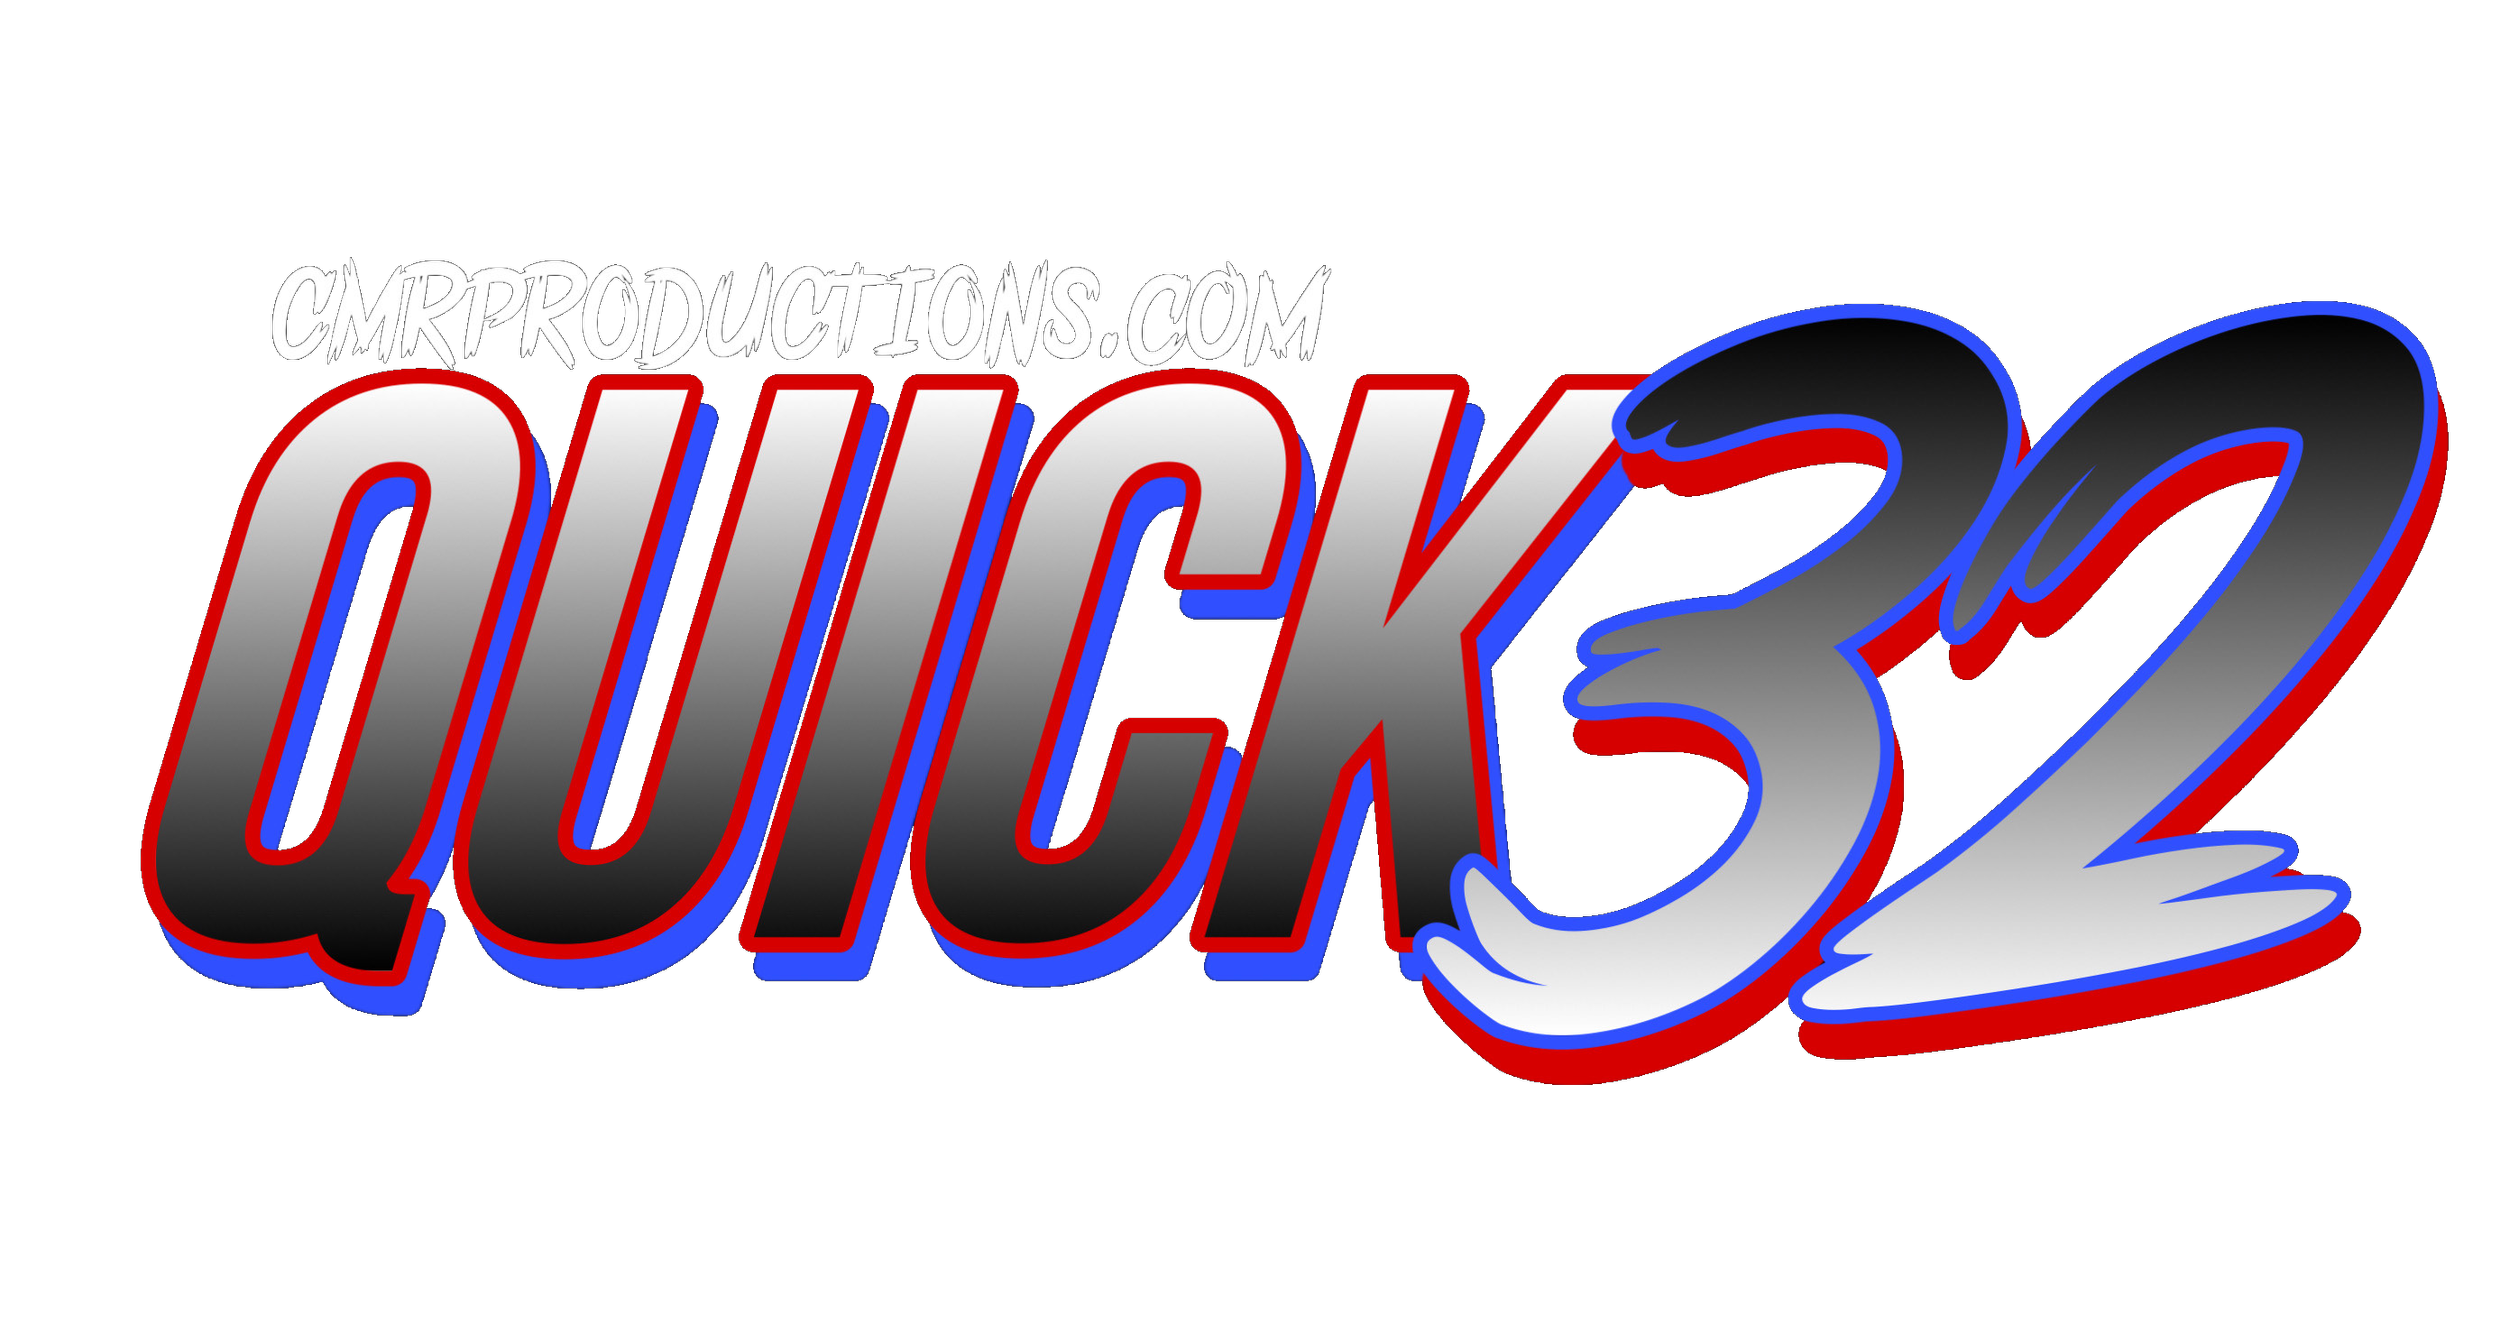 quick 32 logo PNG.png